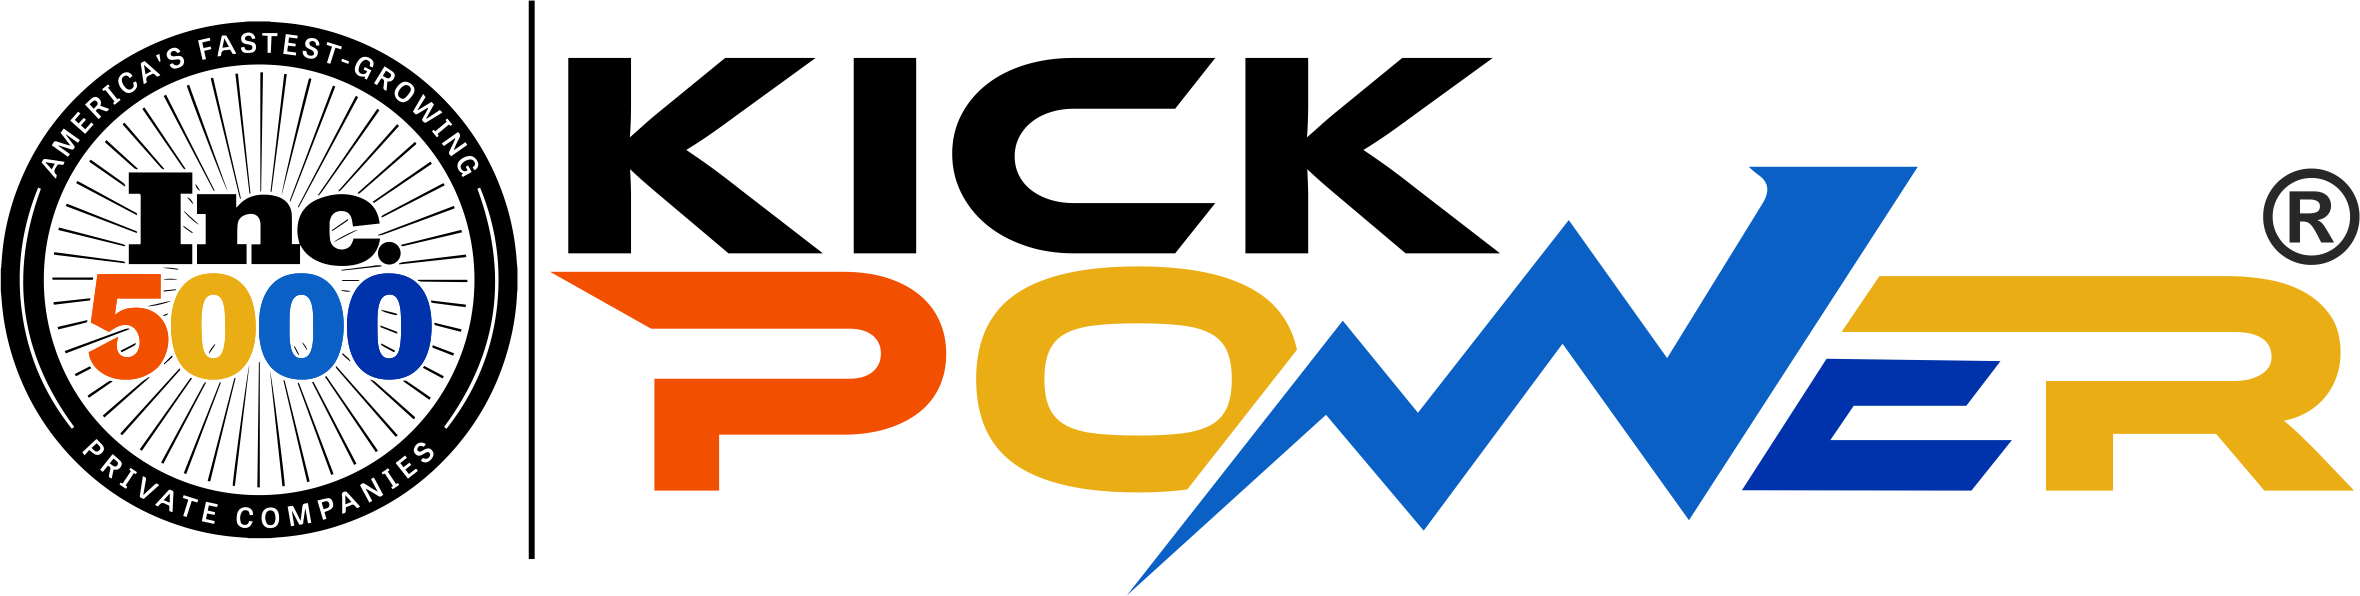 Kickpower logo 5000